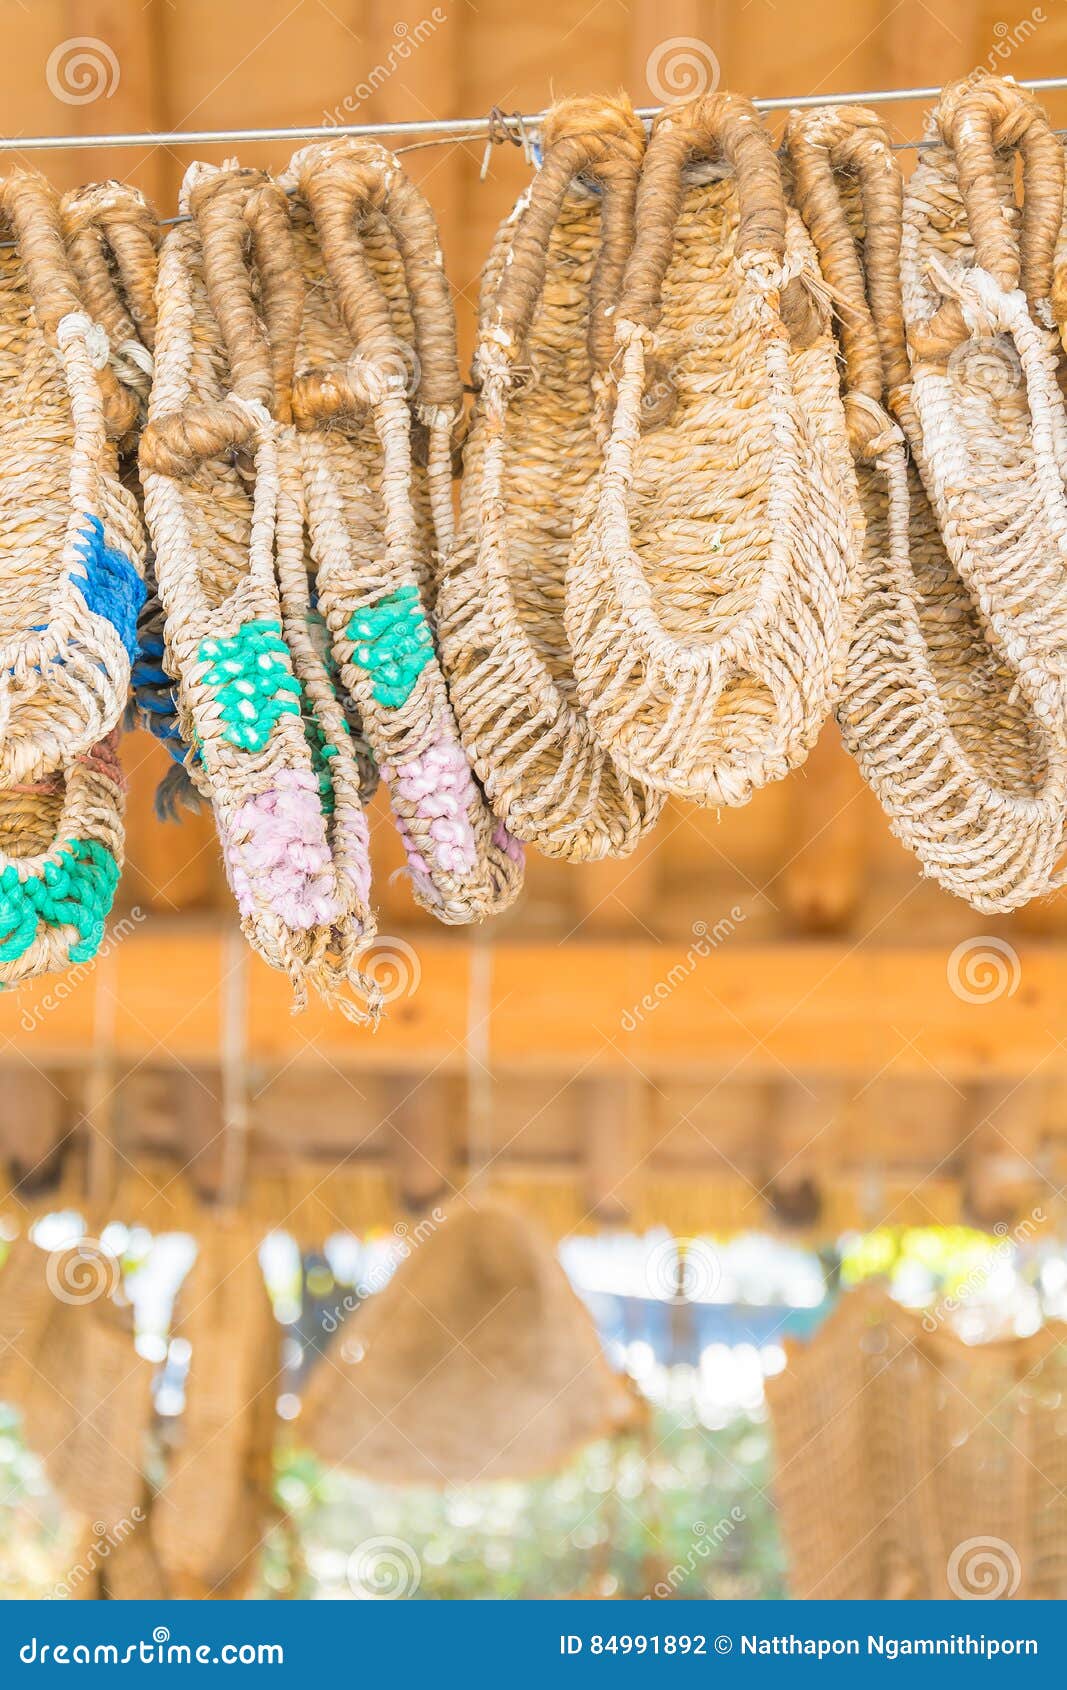 sandals made by hand, using sisal at namsangol hanok village, se